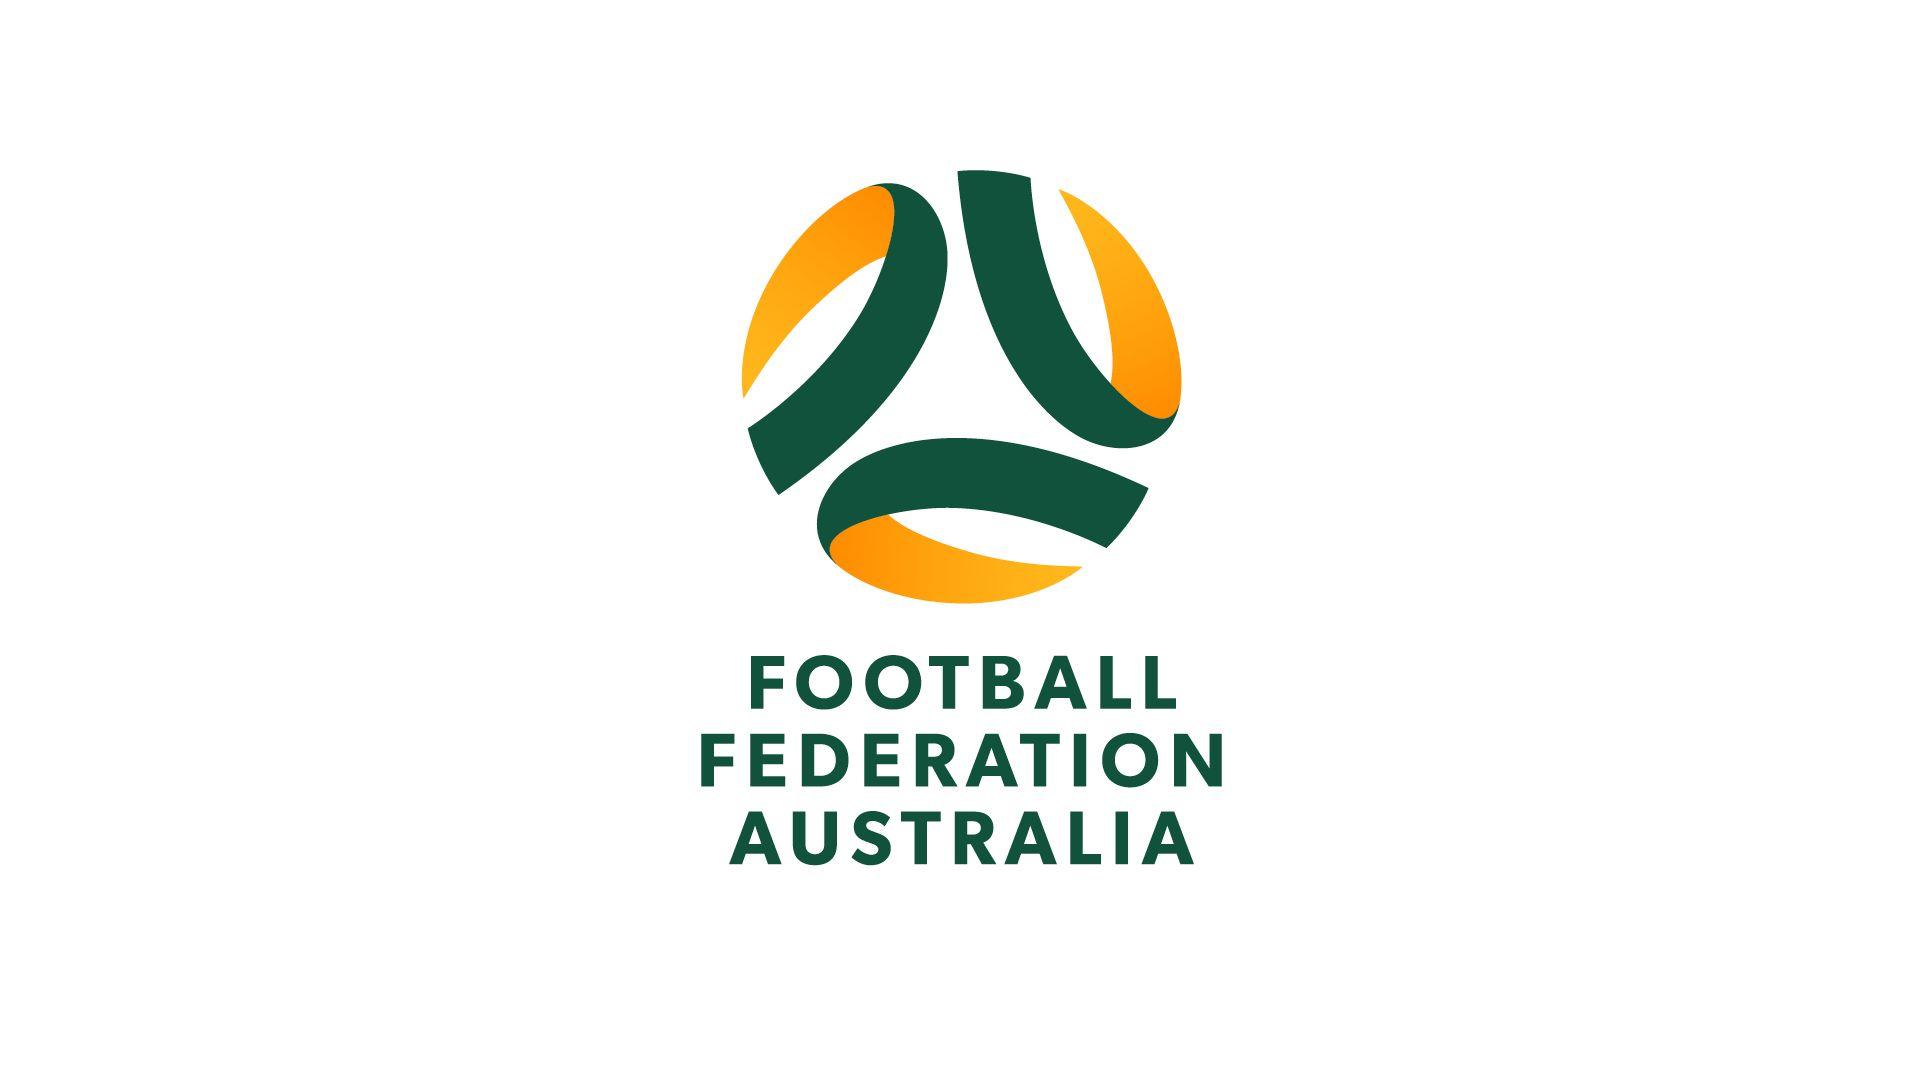 Socceroos Logo - Football Federation of Australia reveals rebrand as part of a new ...